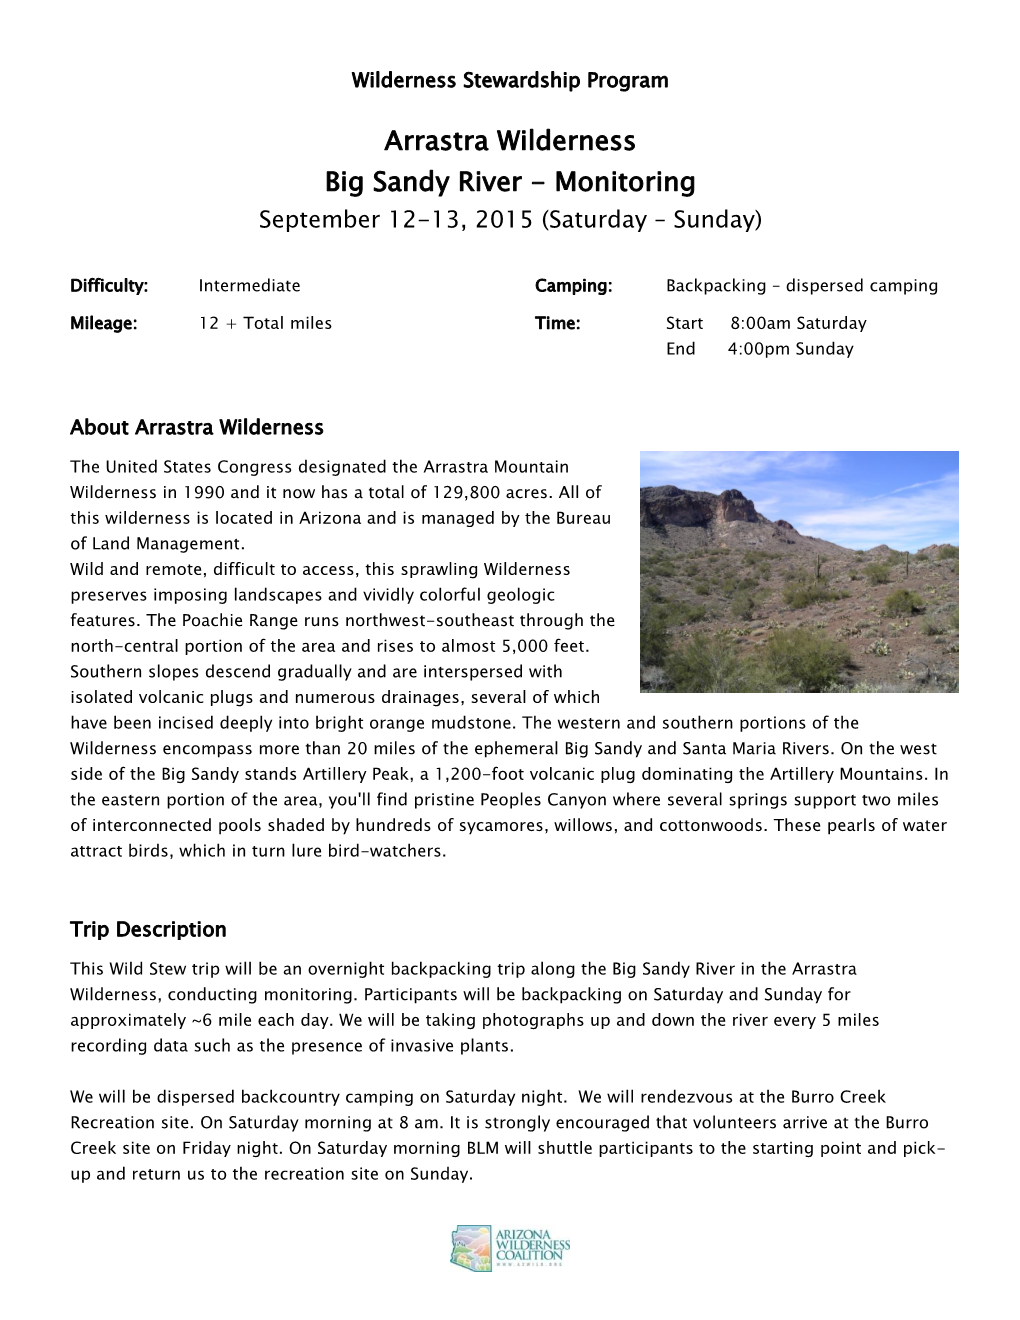 Arrastra Wilderness Big Sandy River - Monitoring September 12-13, 2015 (Saturday – Sunday)